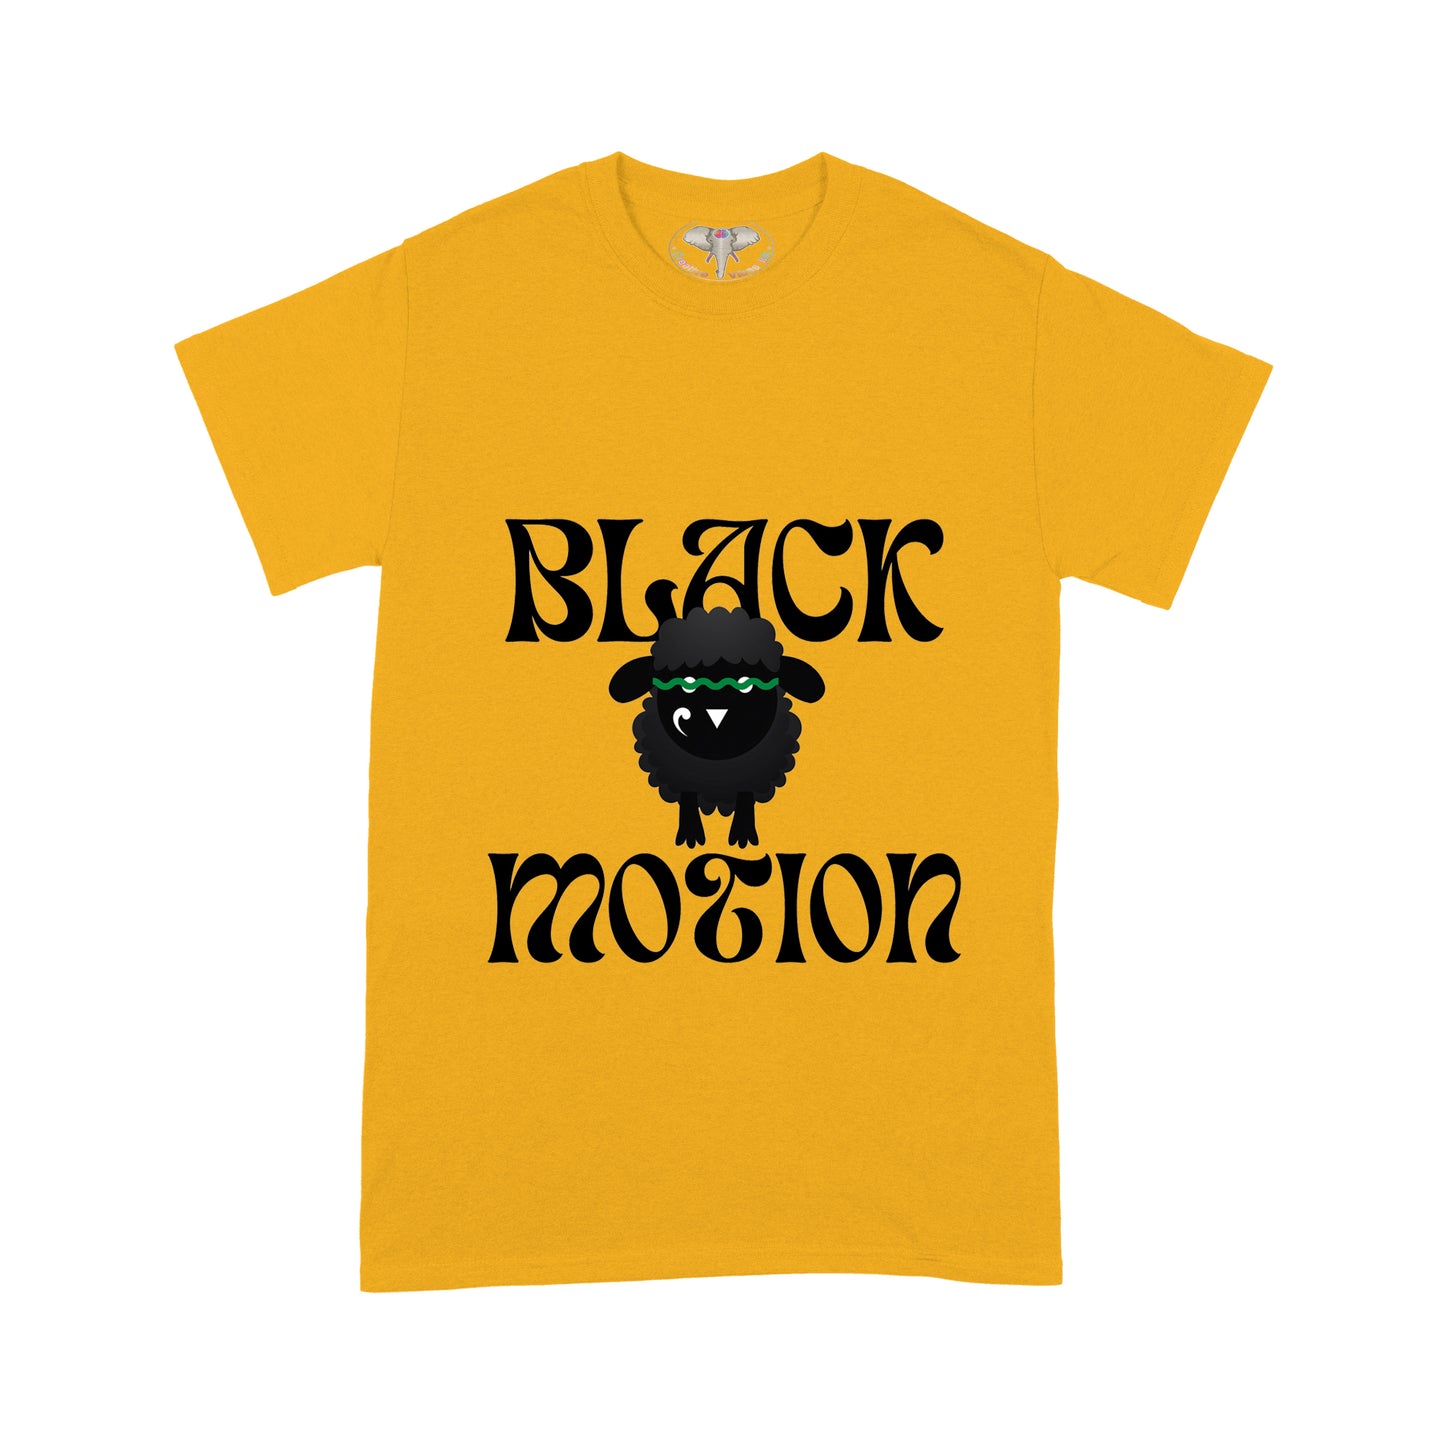 Black Sheep Motion Graphic T-Shirt